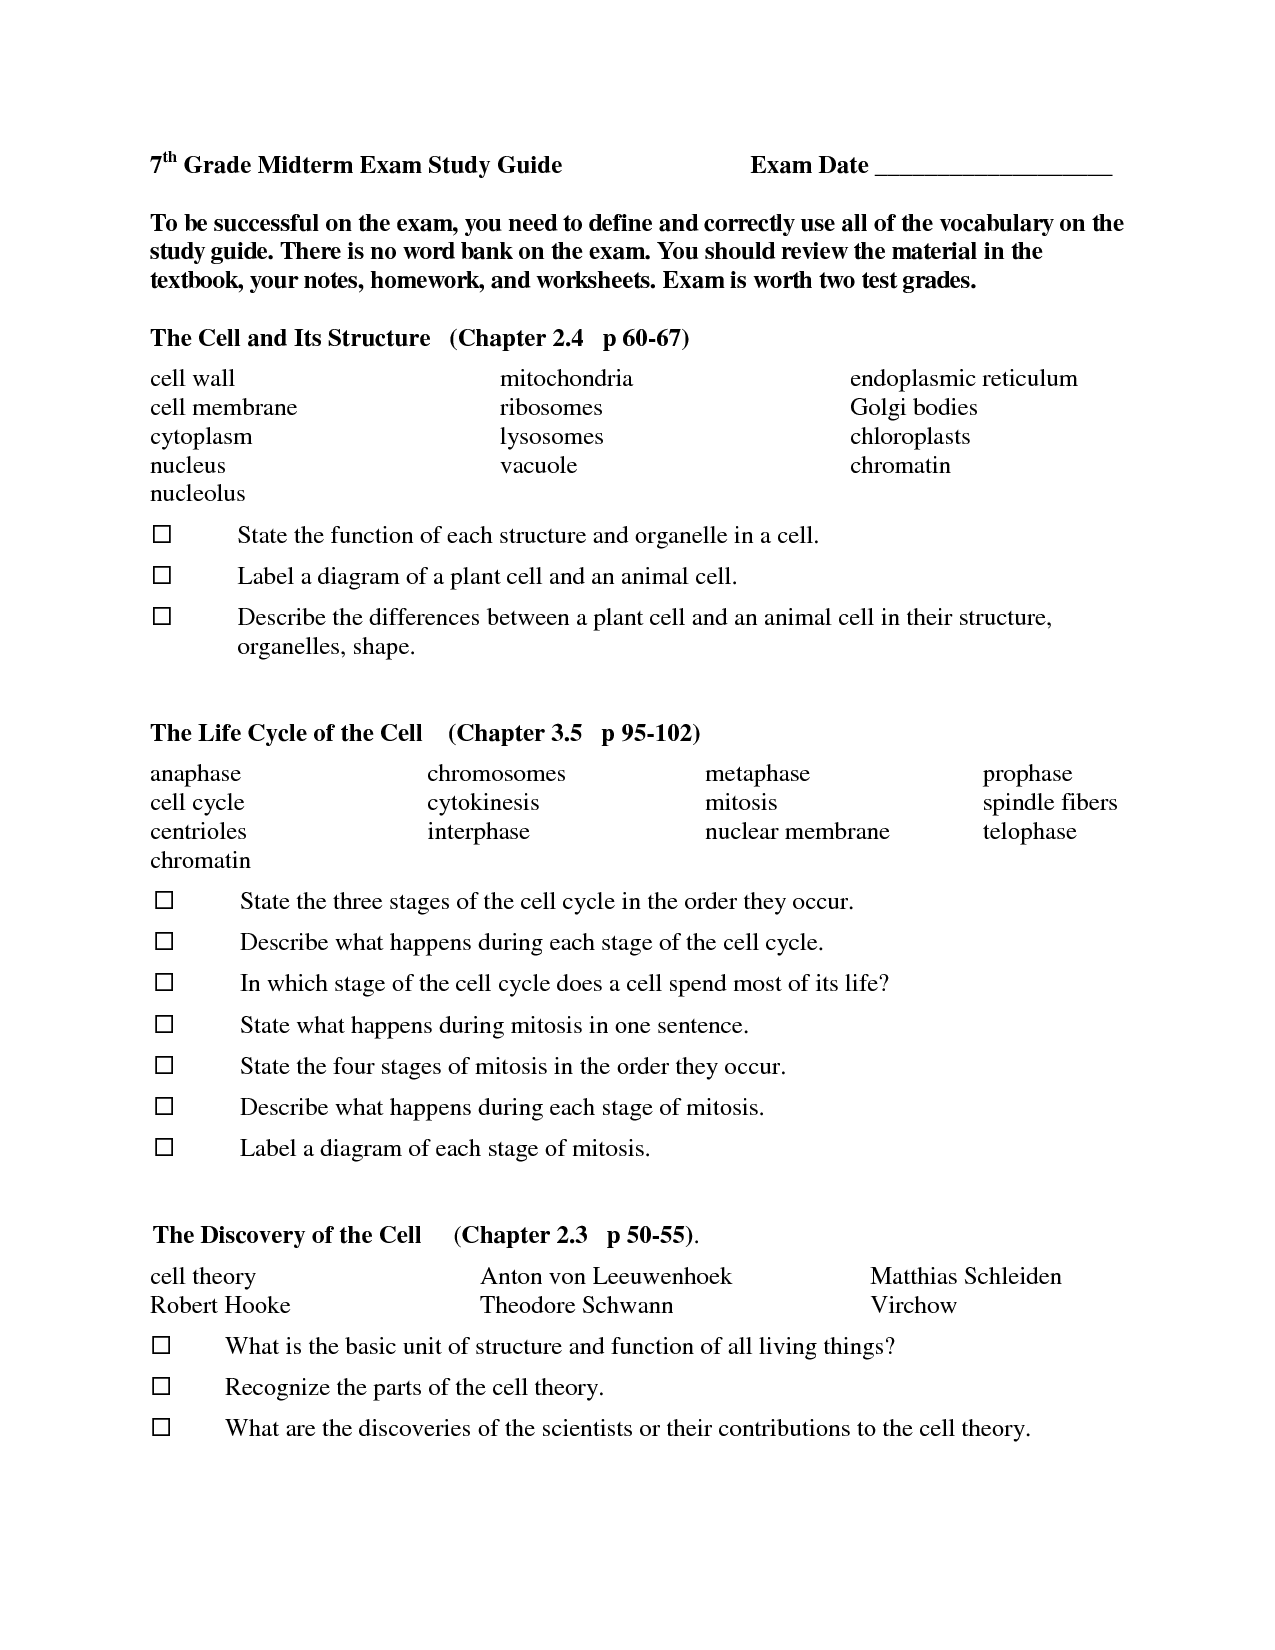 5th-grade-science-cells-worksheet